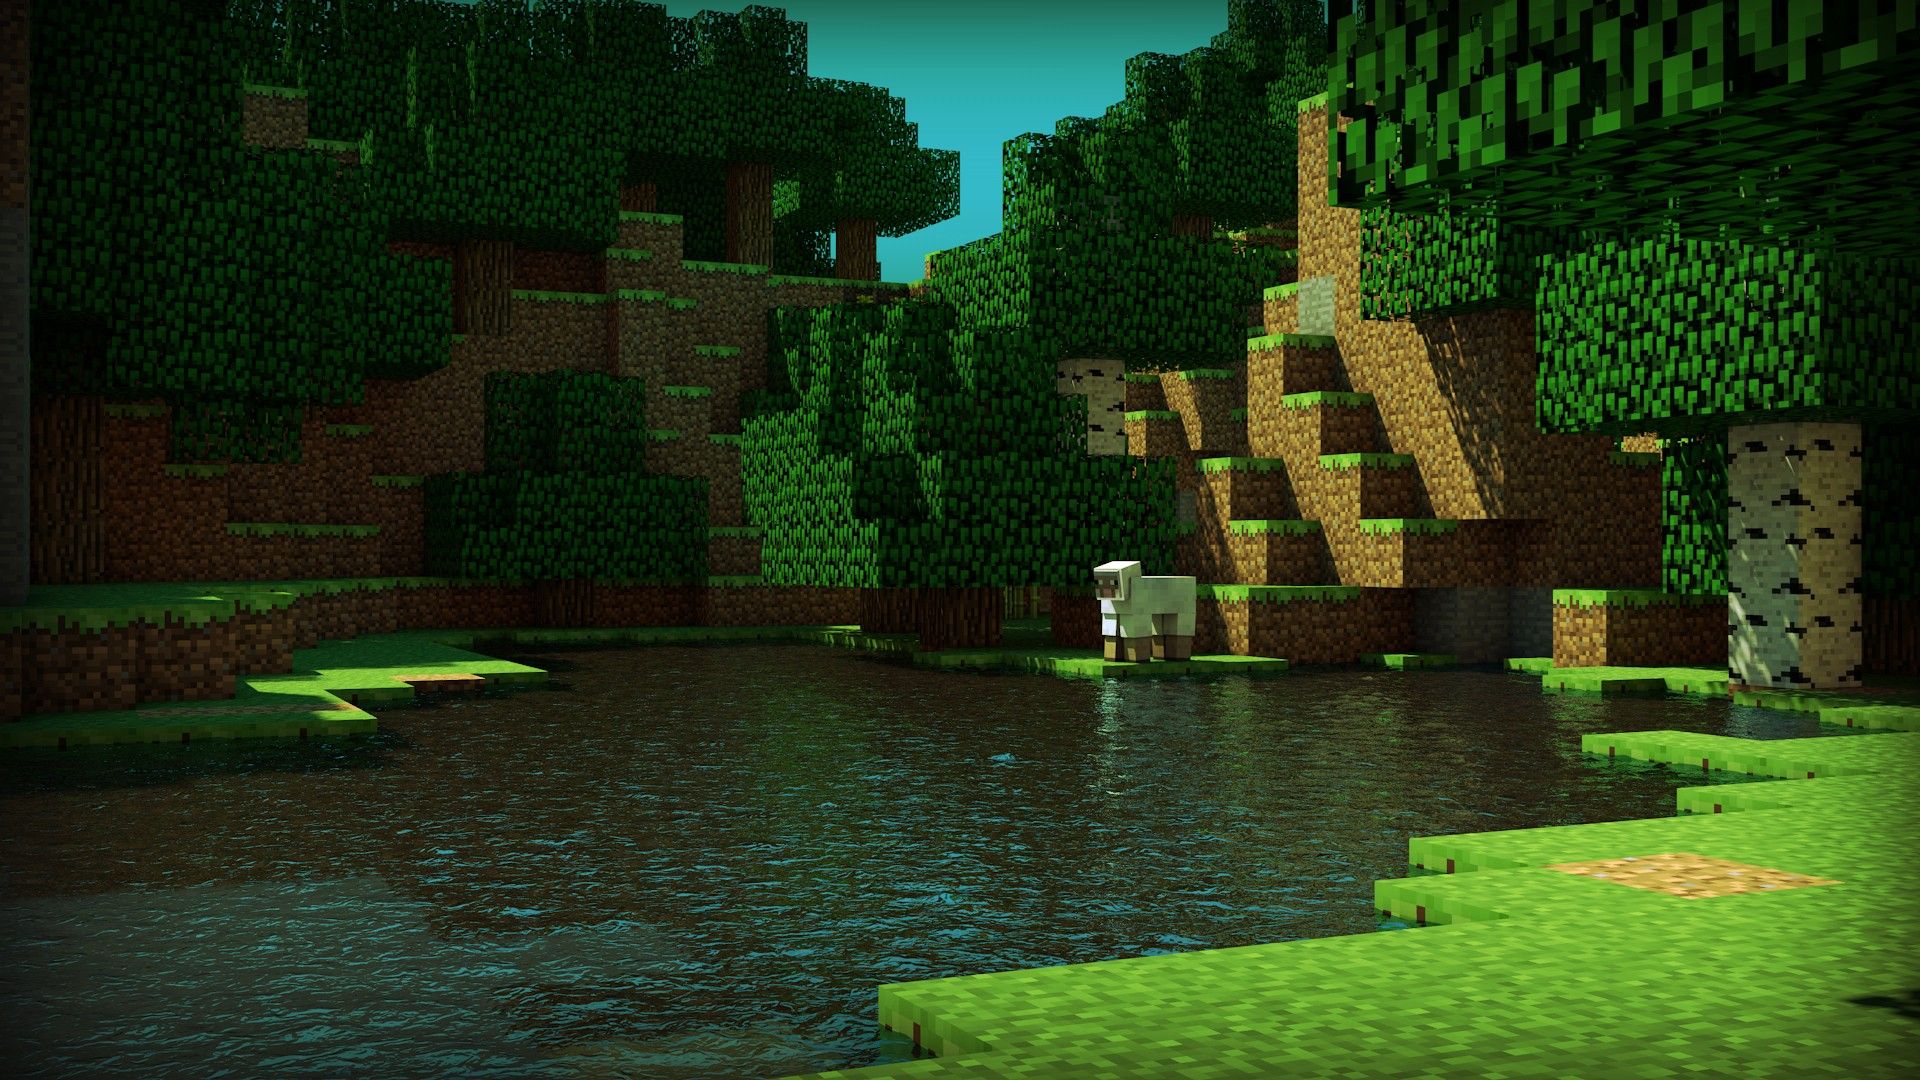 Water trees sheep Minecraft skyscapes cinema 4d terrain tapeta